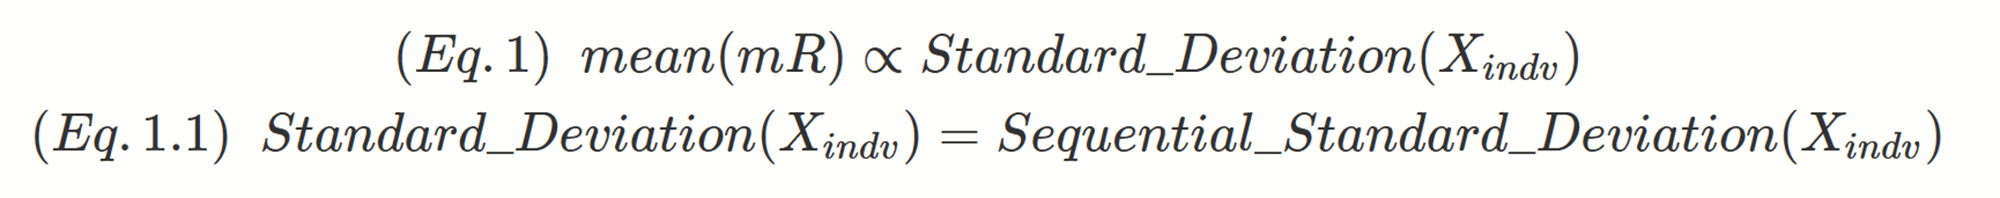 Moving Range Proportional to Standard Deviation